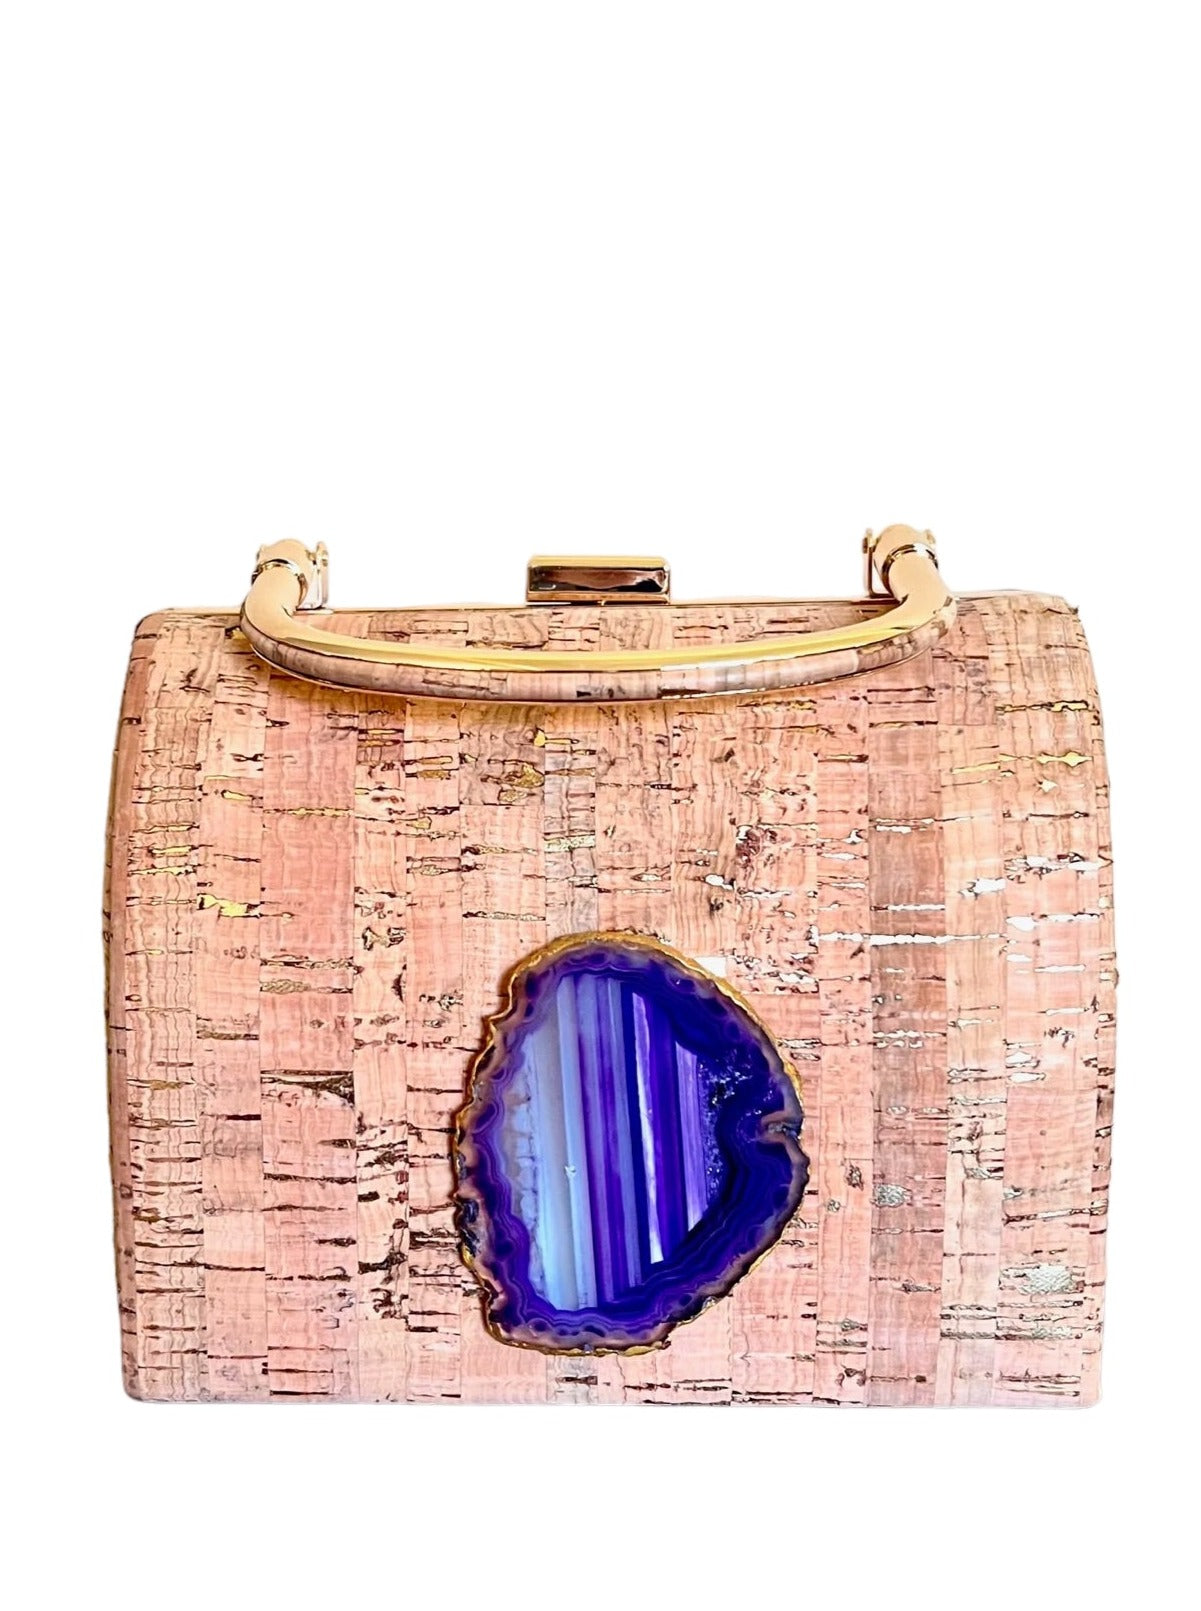 Cork and agate stone handmade one of a kind kg designs handbag